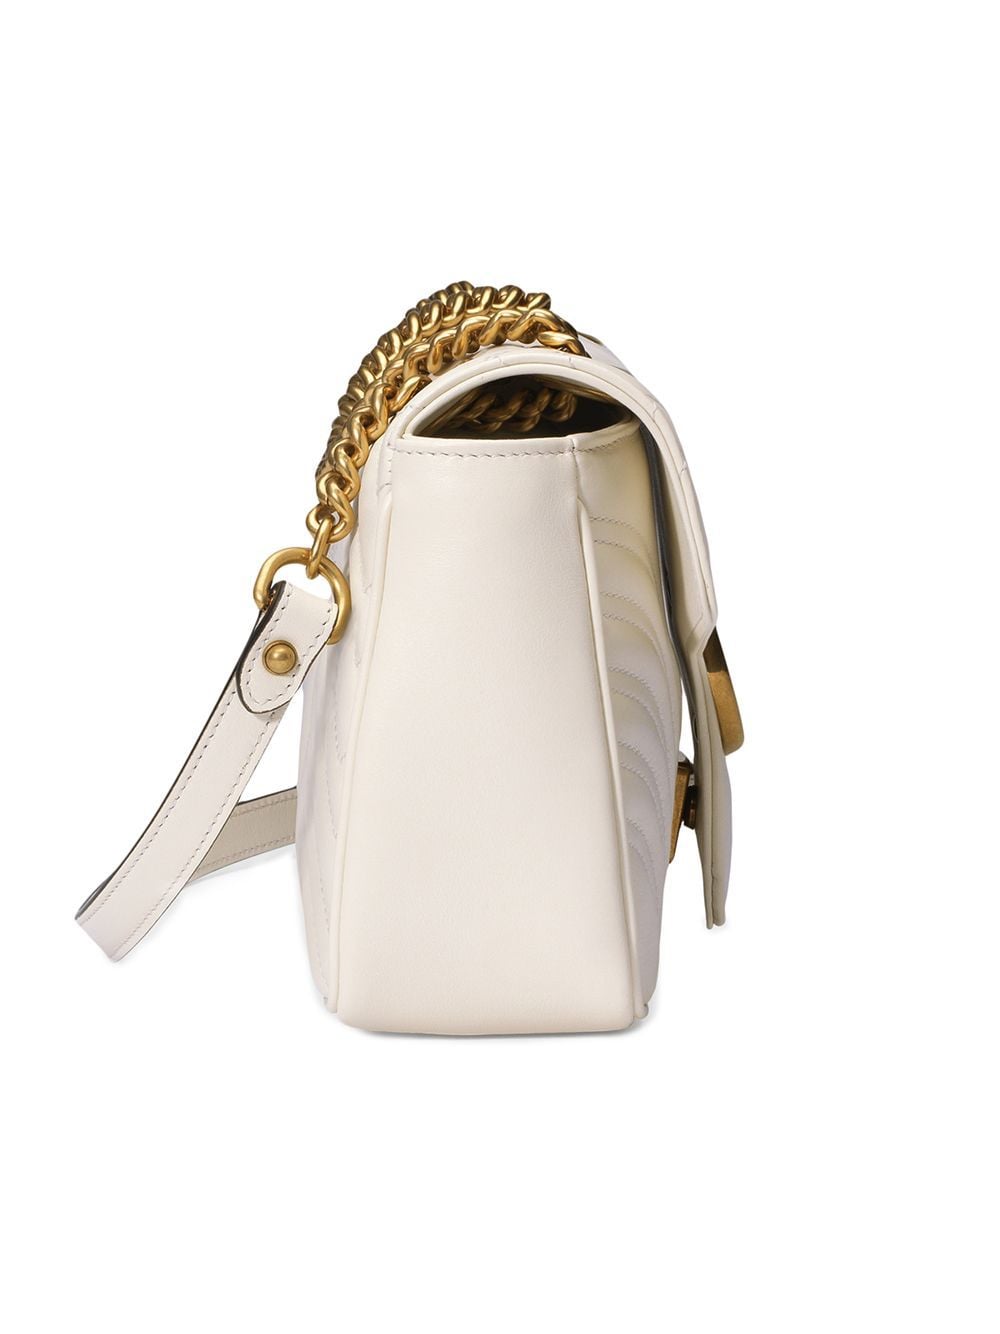 Gucci Marmont Small Matelassé Shoulder Bag - Farfetch